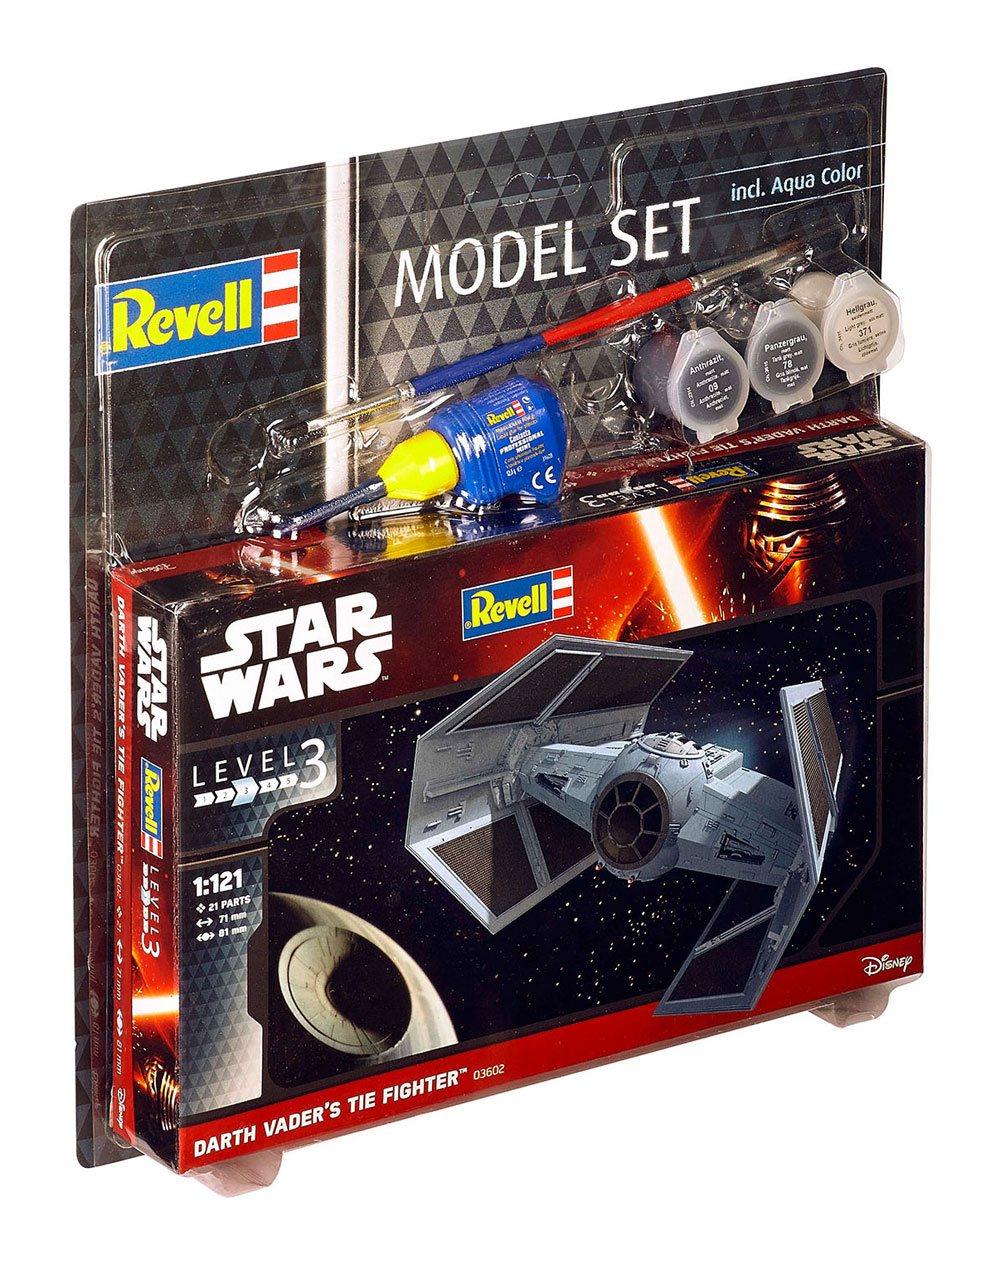 Star Wars Model Kit 1/121 Model Set Darth Vader's TIE Fighter 7 cm 4009803636023